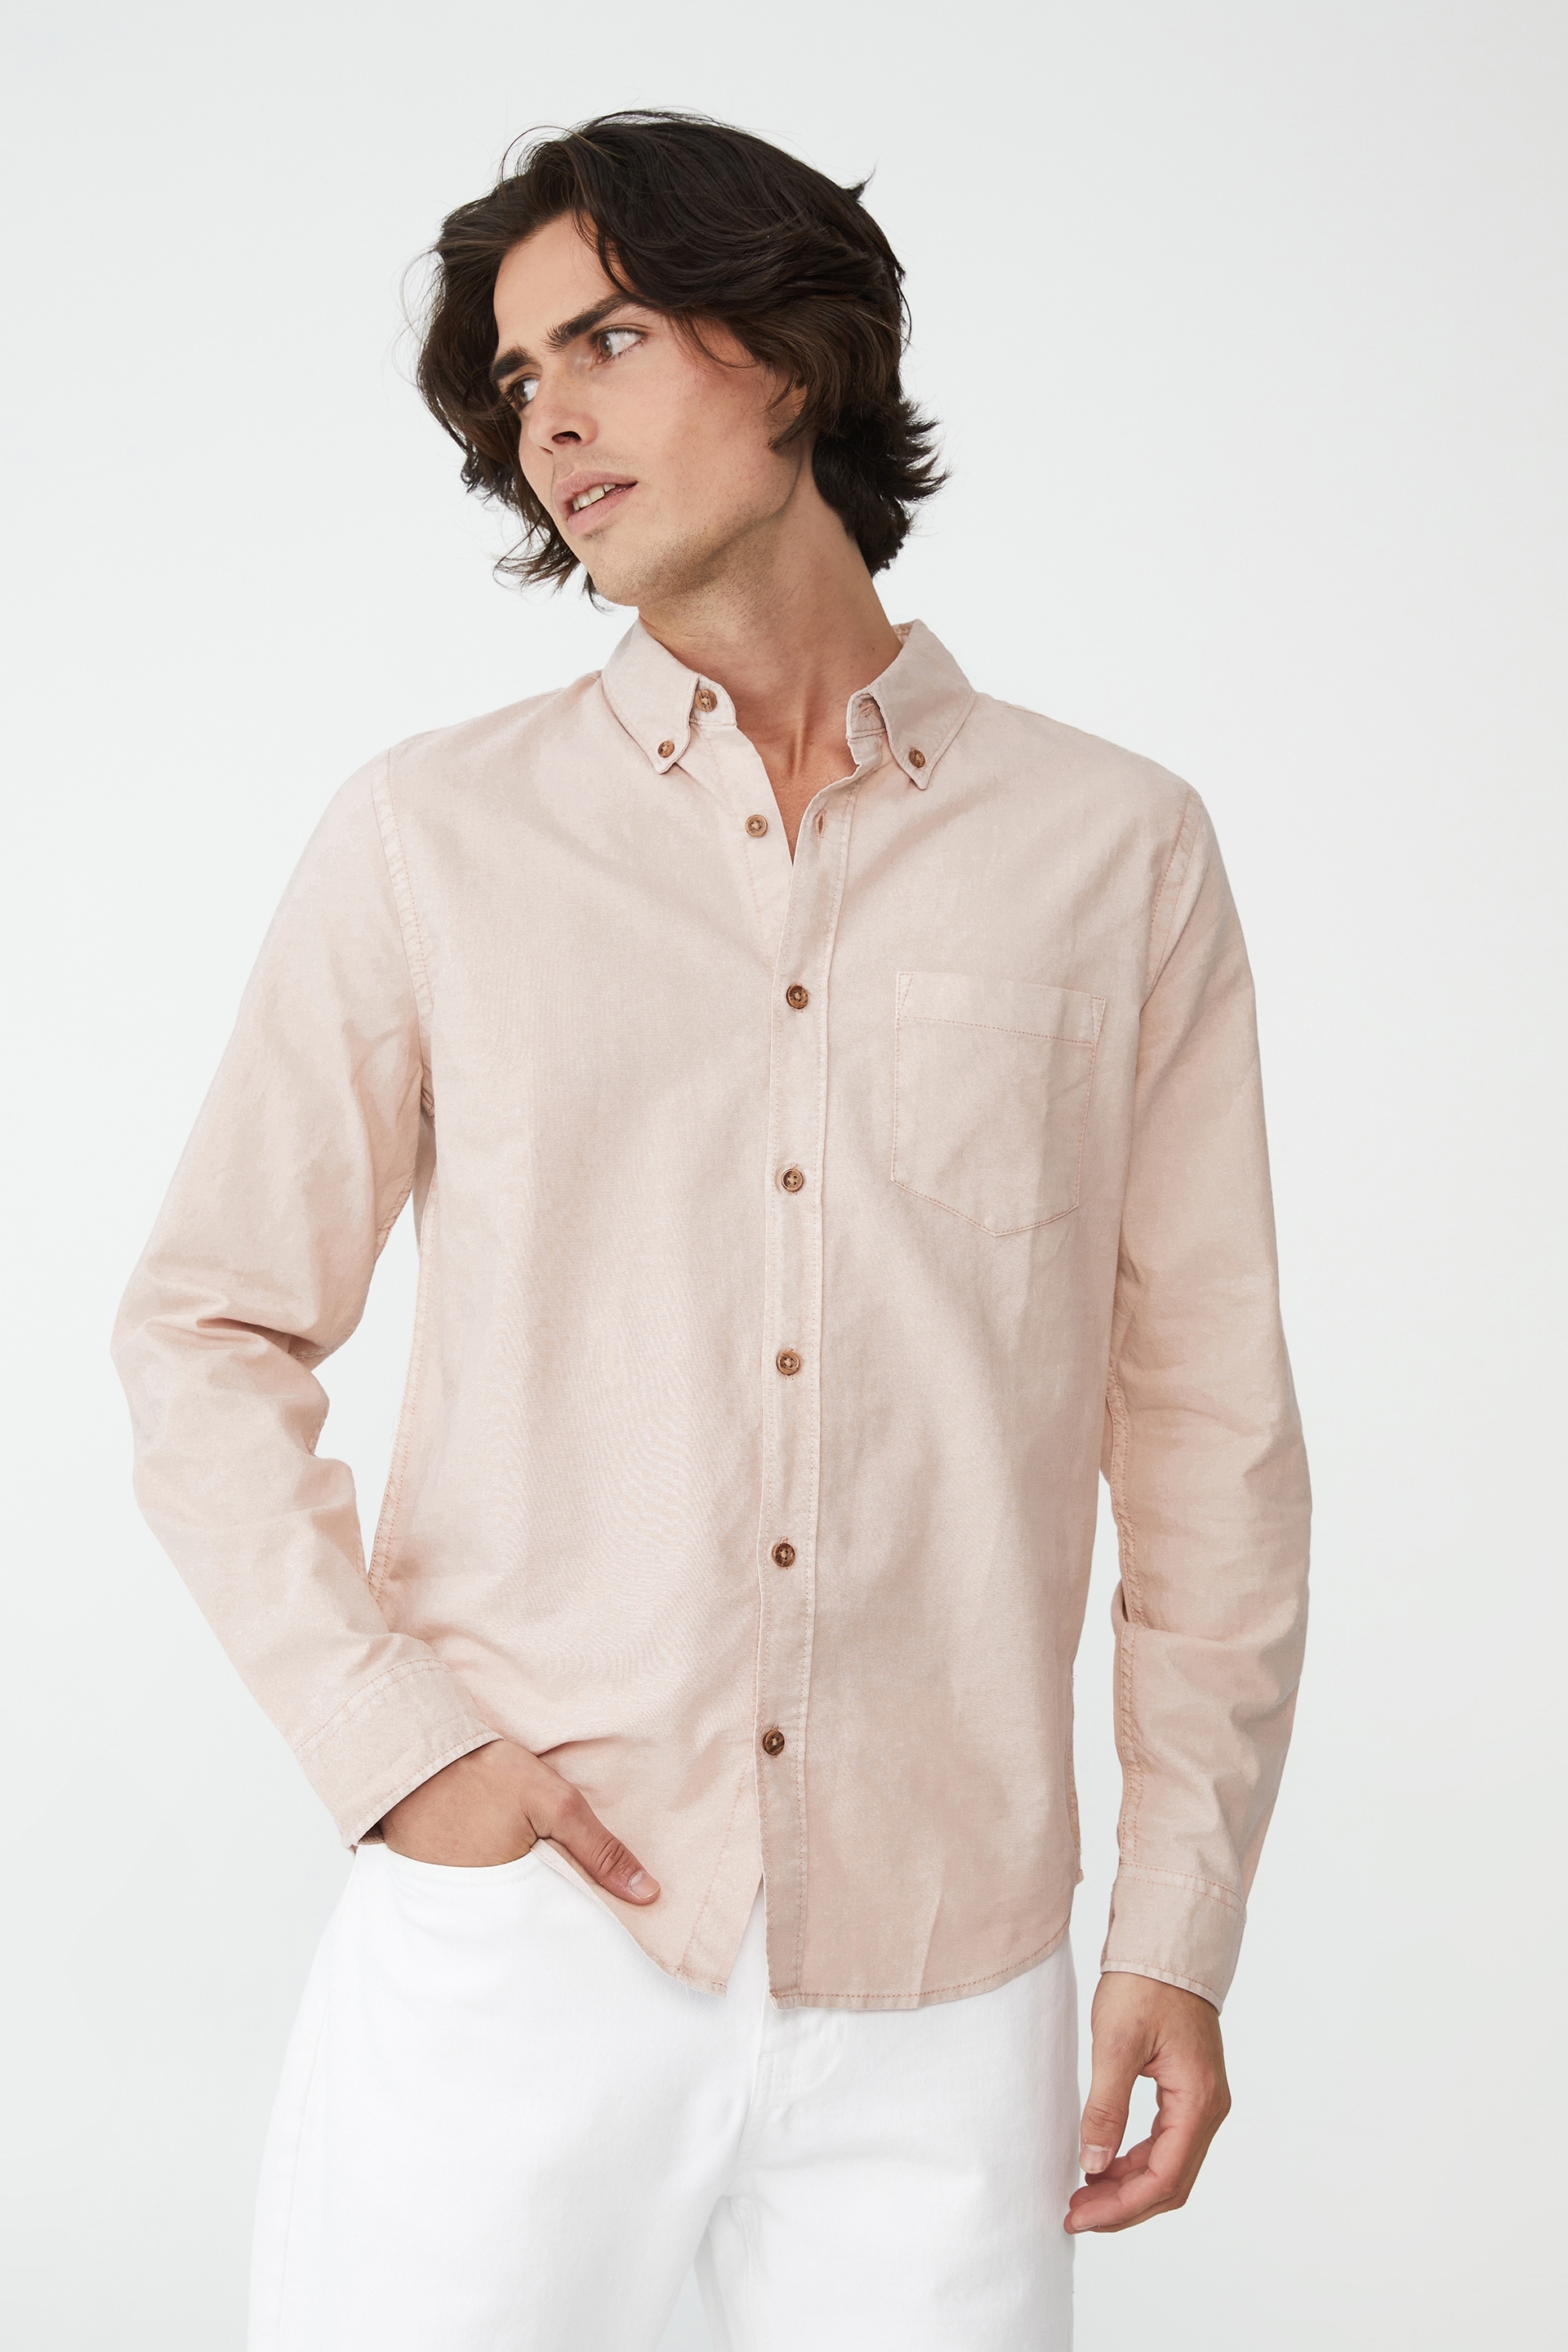 Cotton On Men - Mayfair Long Sleeve Shirt - Vintage pink